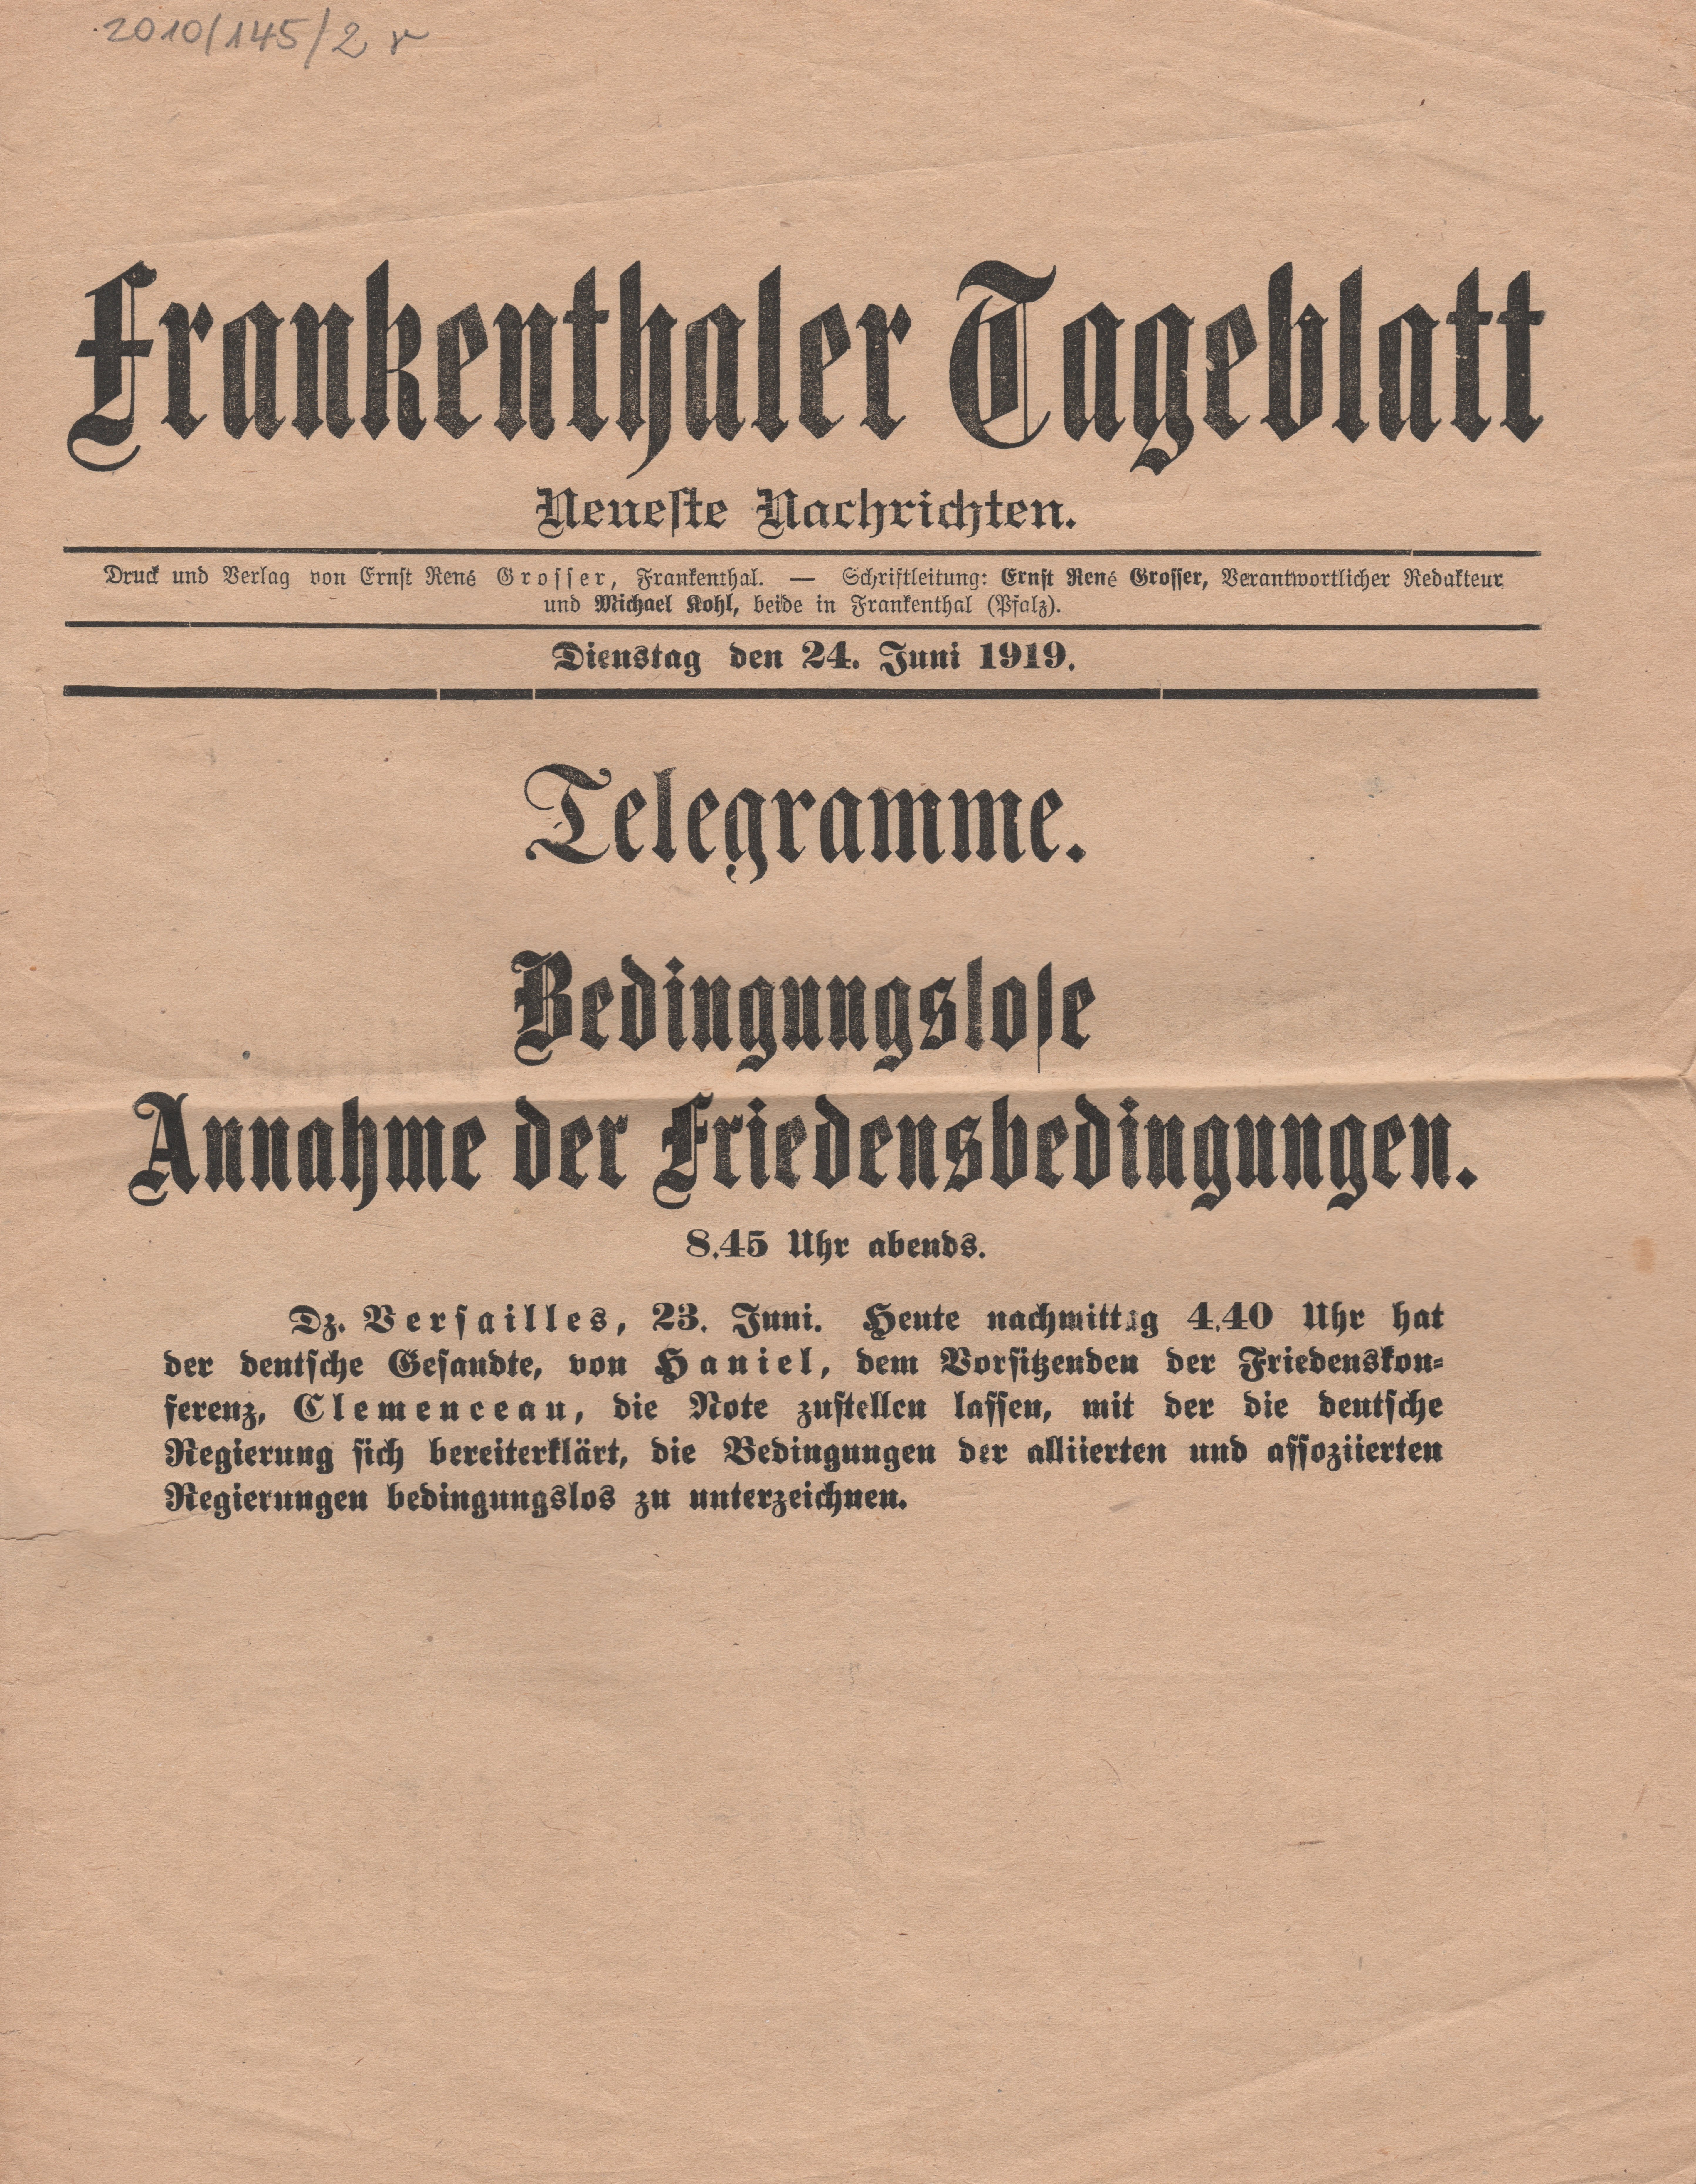 Frankenthaler Tageblatt Telegramme: Bedingungslose Annahme der Friedensbedingungen (Stadtmuseum Bad Dürkheim im Kulturzentrum Haus Catoir CC BY-NC-SA)